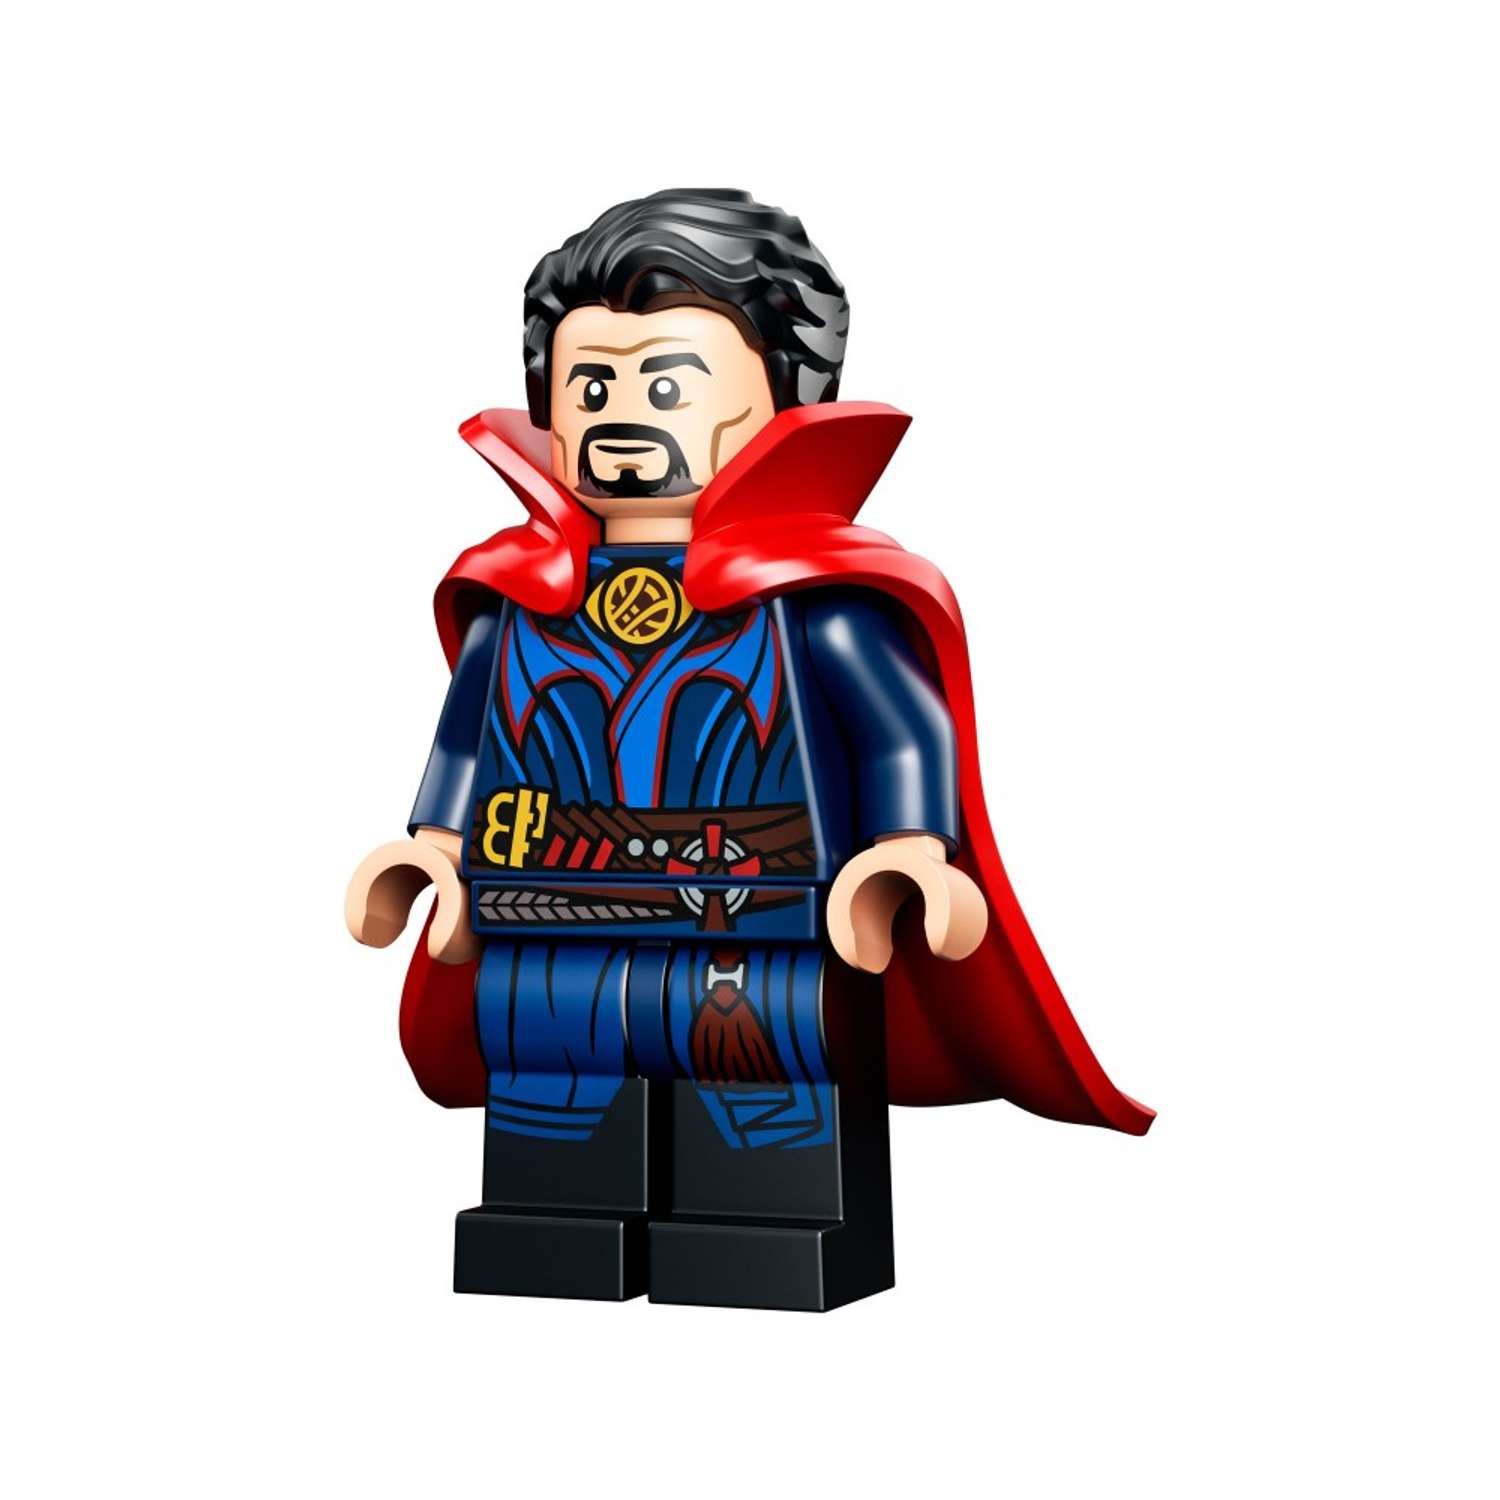 Конструктор LEGO Marvel Super Heroes схватка с гаргантосом L-76205 - фото 9